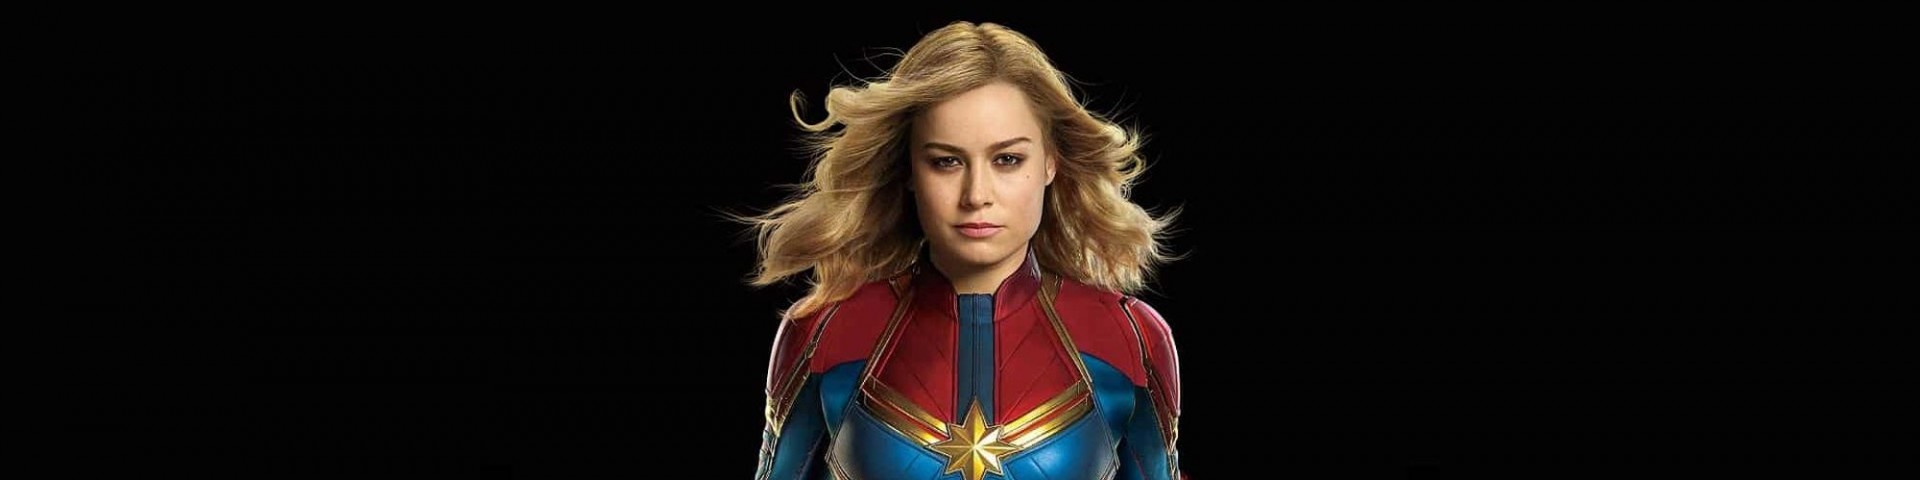 Captain Marvel: teaser trailer ufficiale - Video